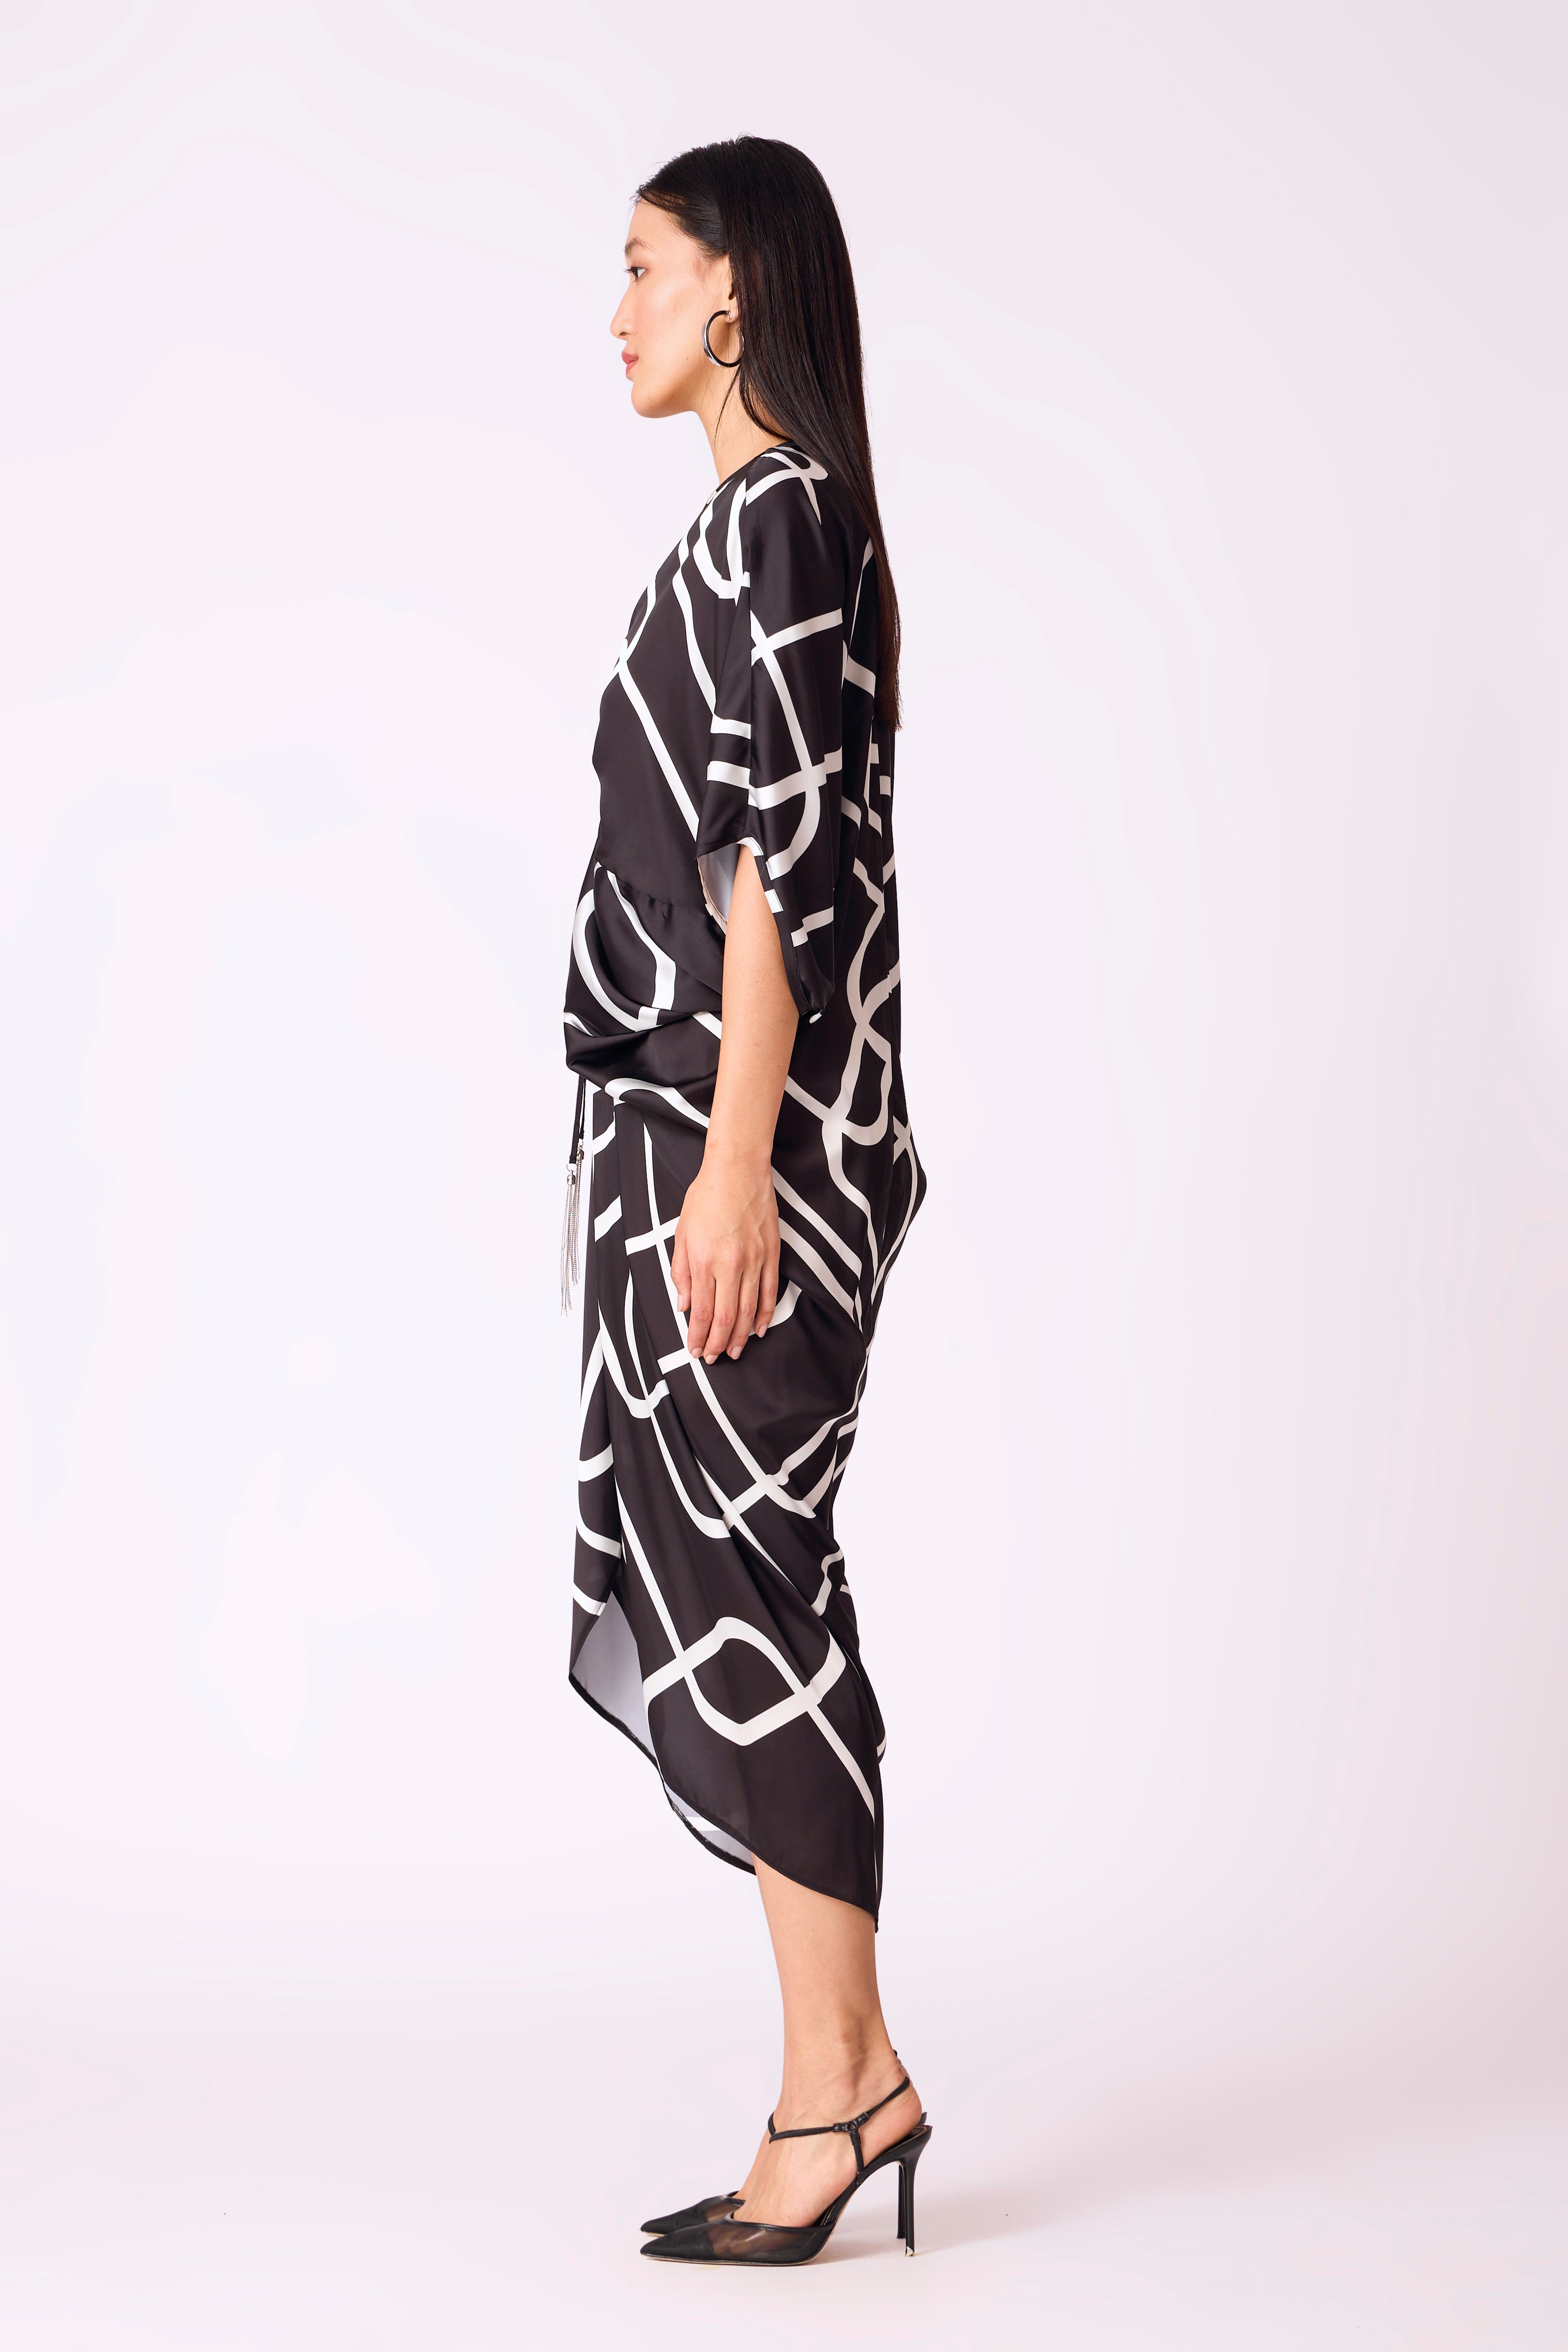 Aika Satin Print Dress - Black & White